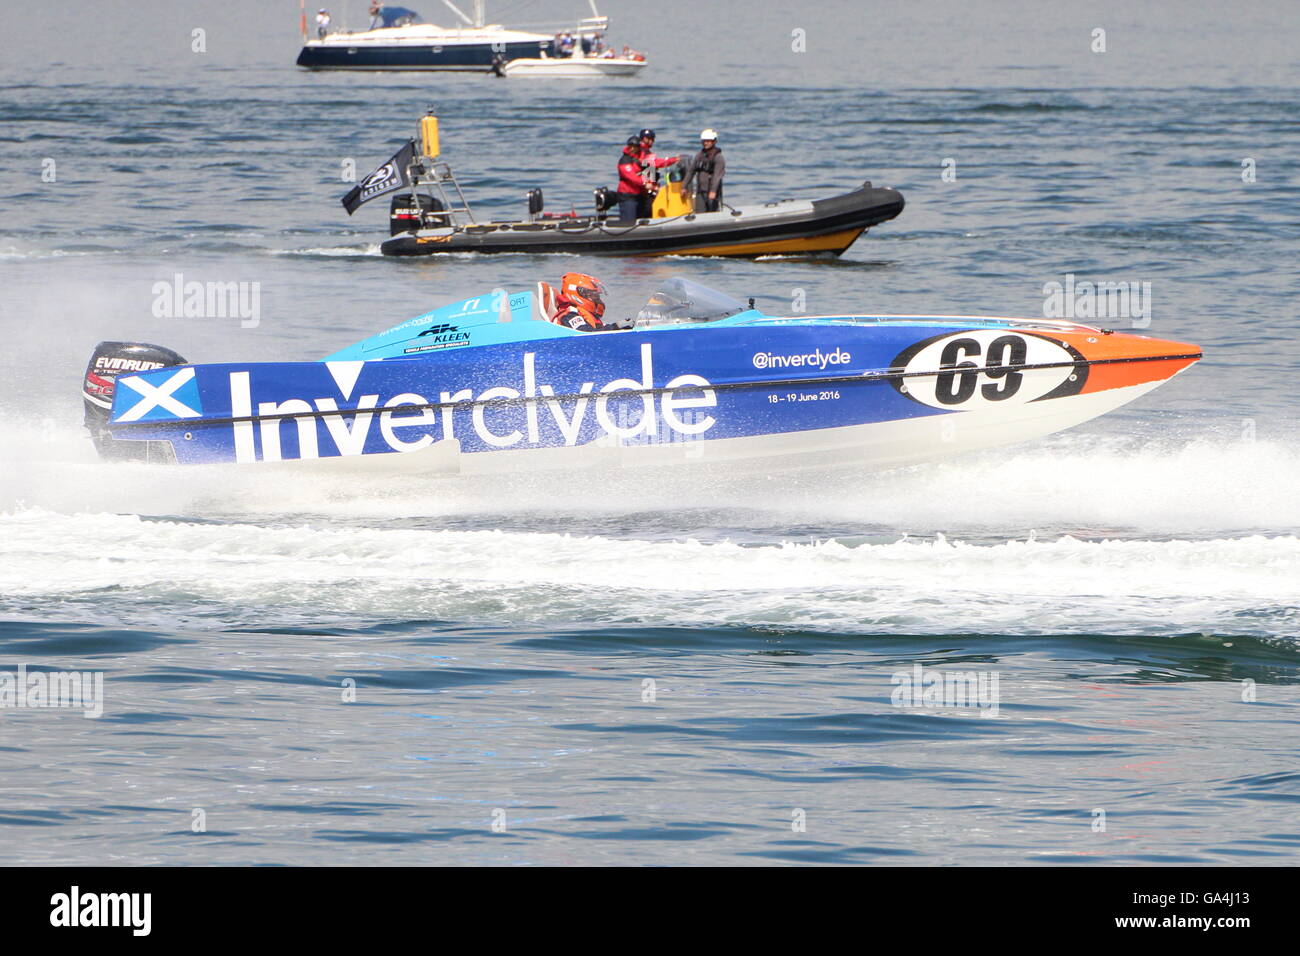 El espíritu de equipo de Inverclyde durante el Grand Prix escocés inaugural del Mar, celebrada en Greenock en el Firth of Clyde. Foto de stock